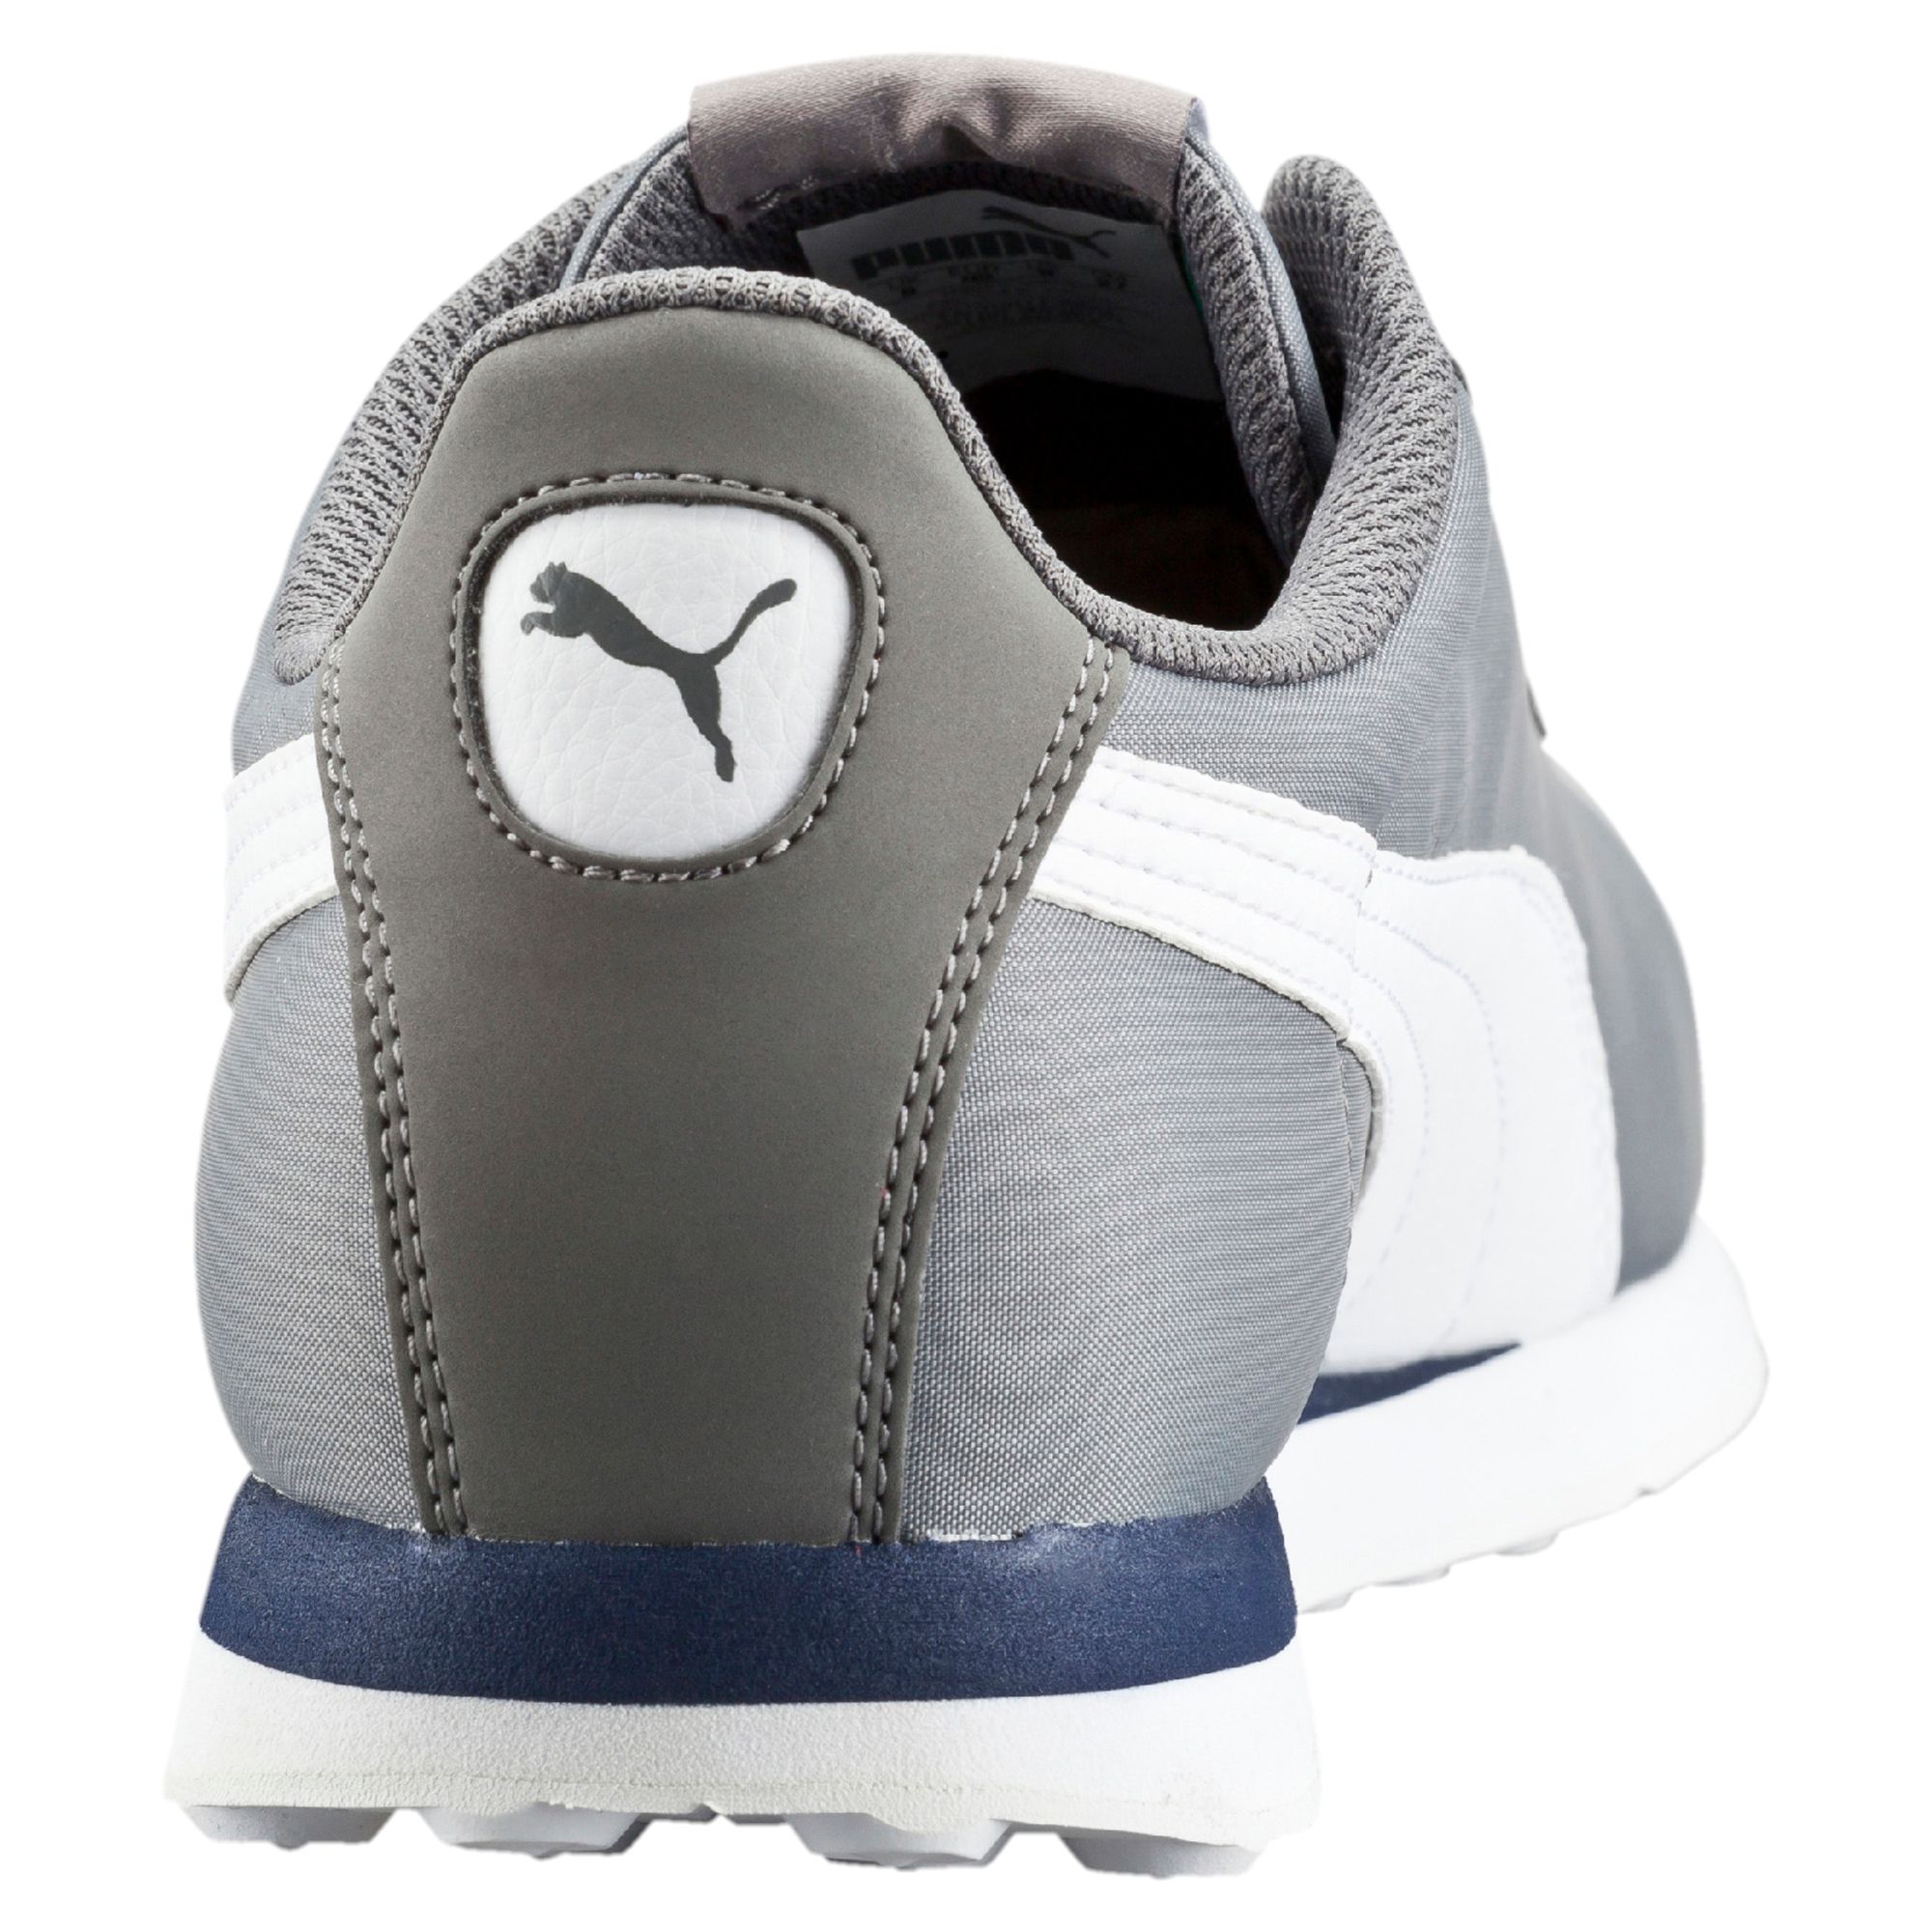 Puma Turin NL grey Мъжки спортни обувки 362167-01